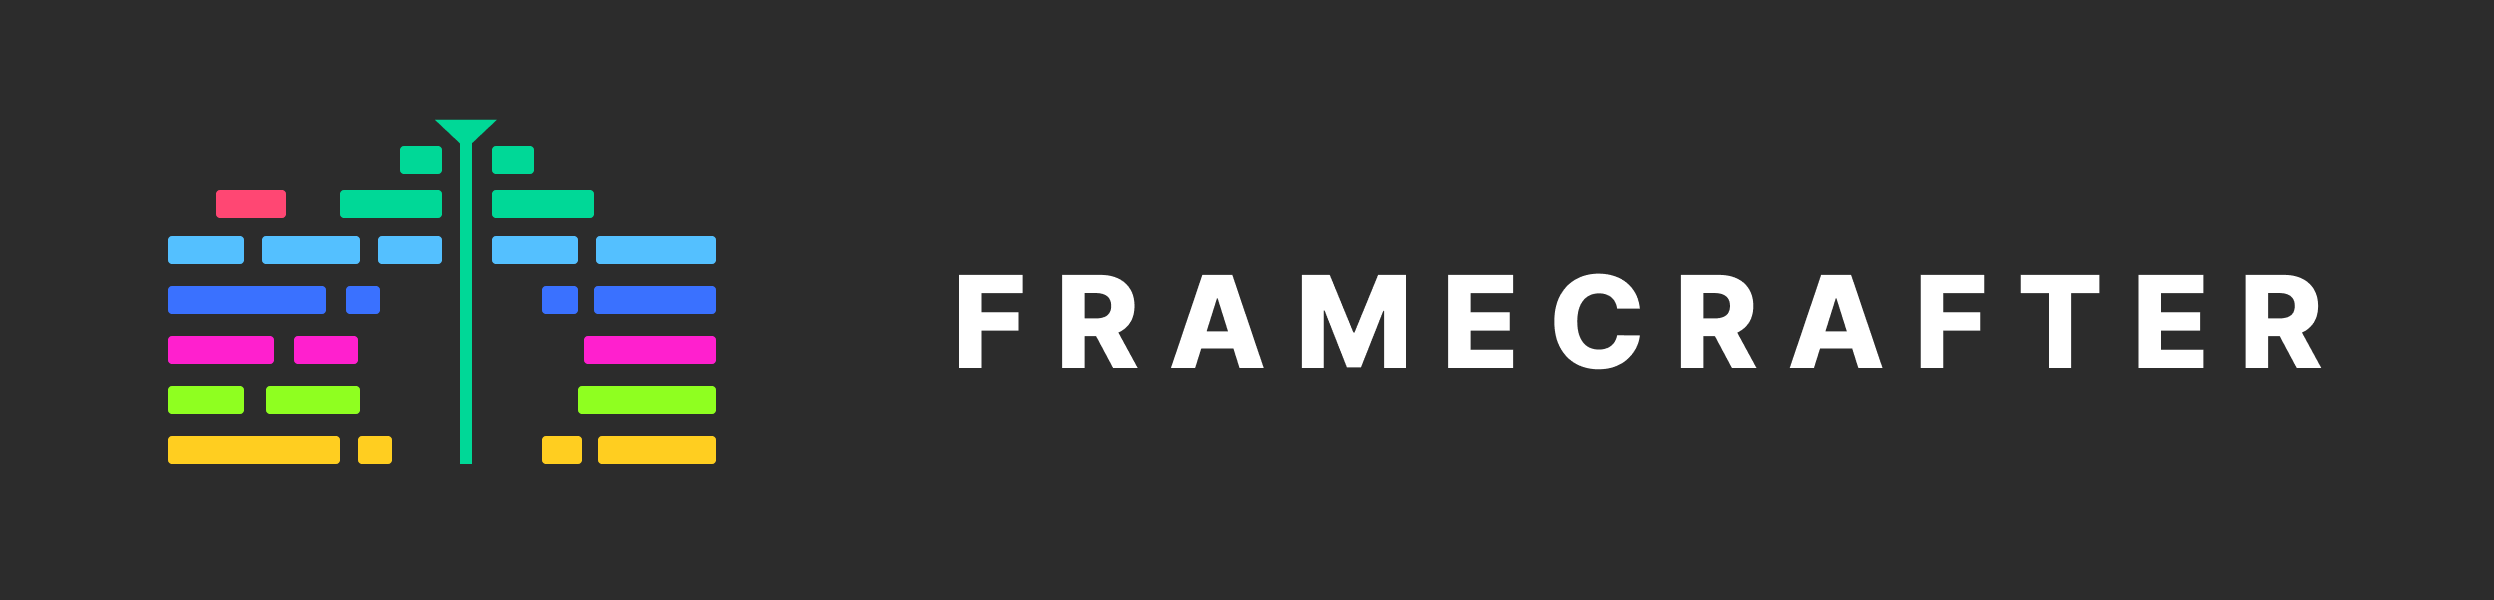 framecrafter-logo-banner